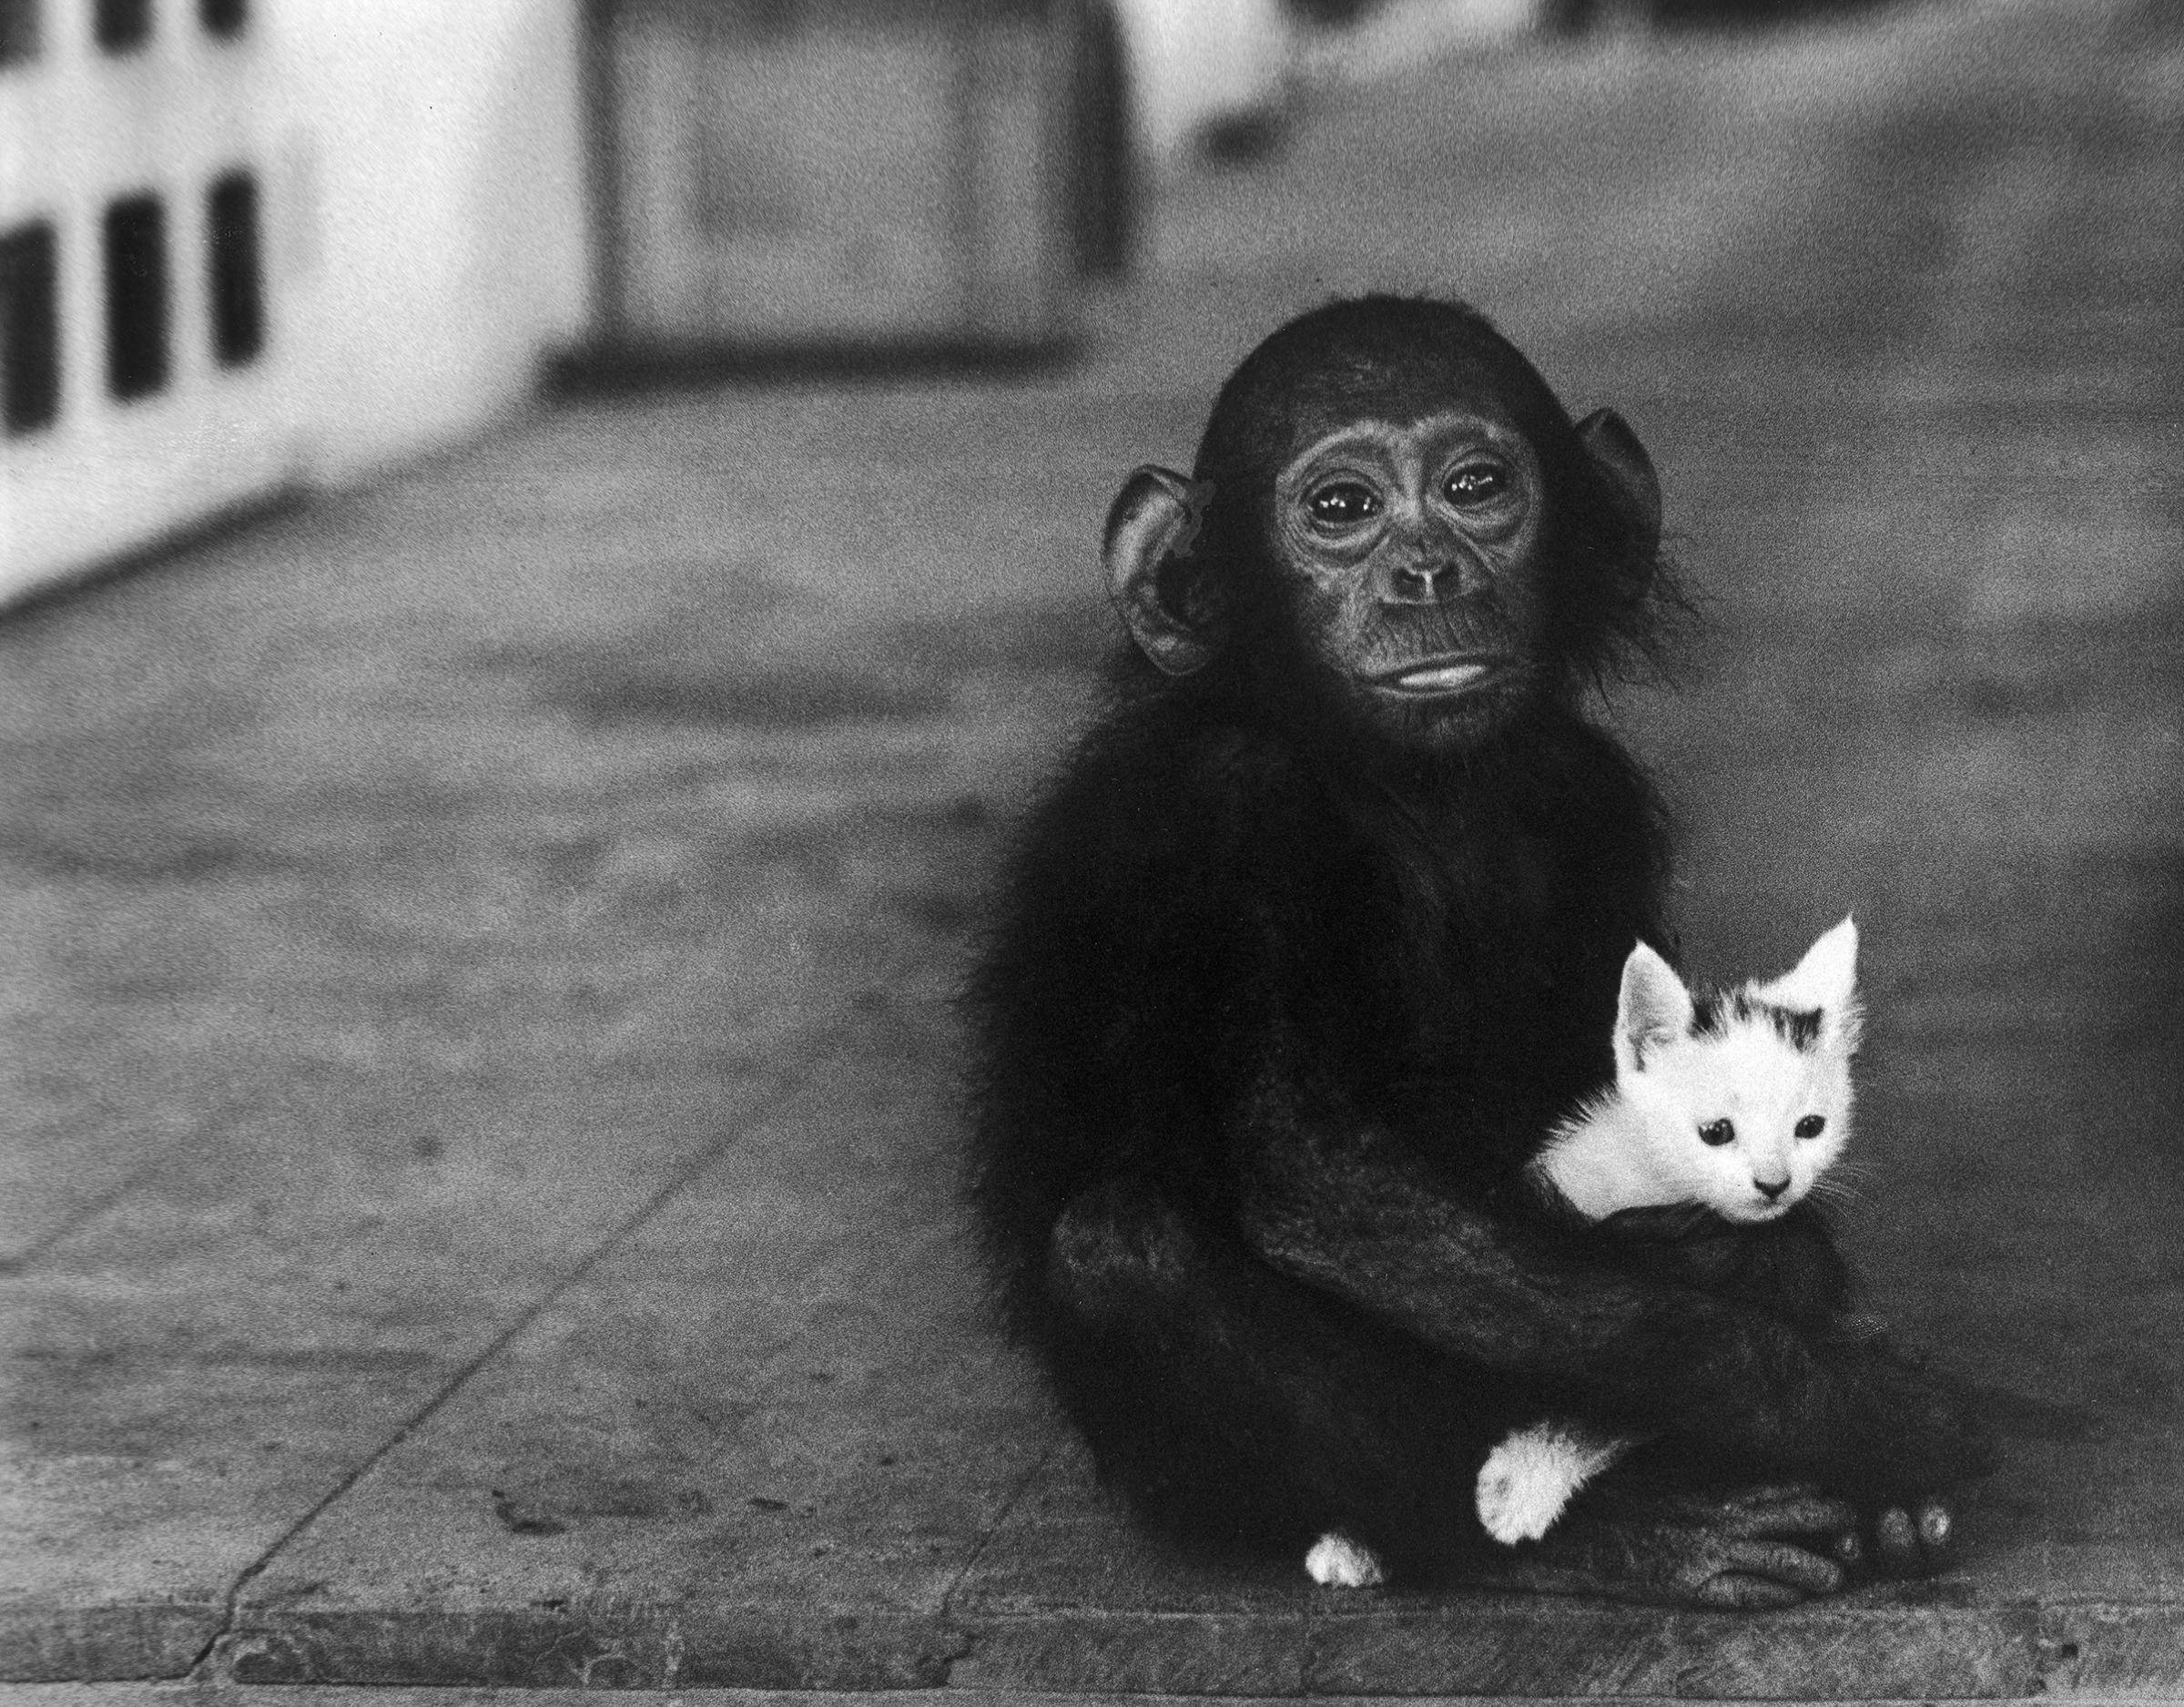 Baby chimpanzee holding a kitten at Dr. Albert Schweitzer's hospital, 1954.